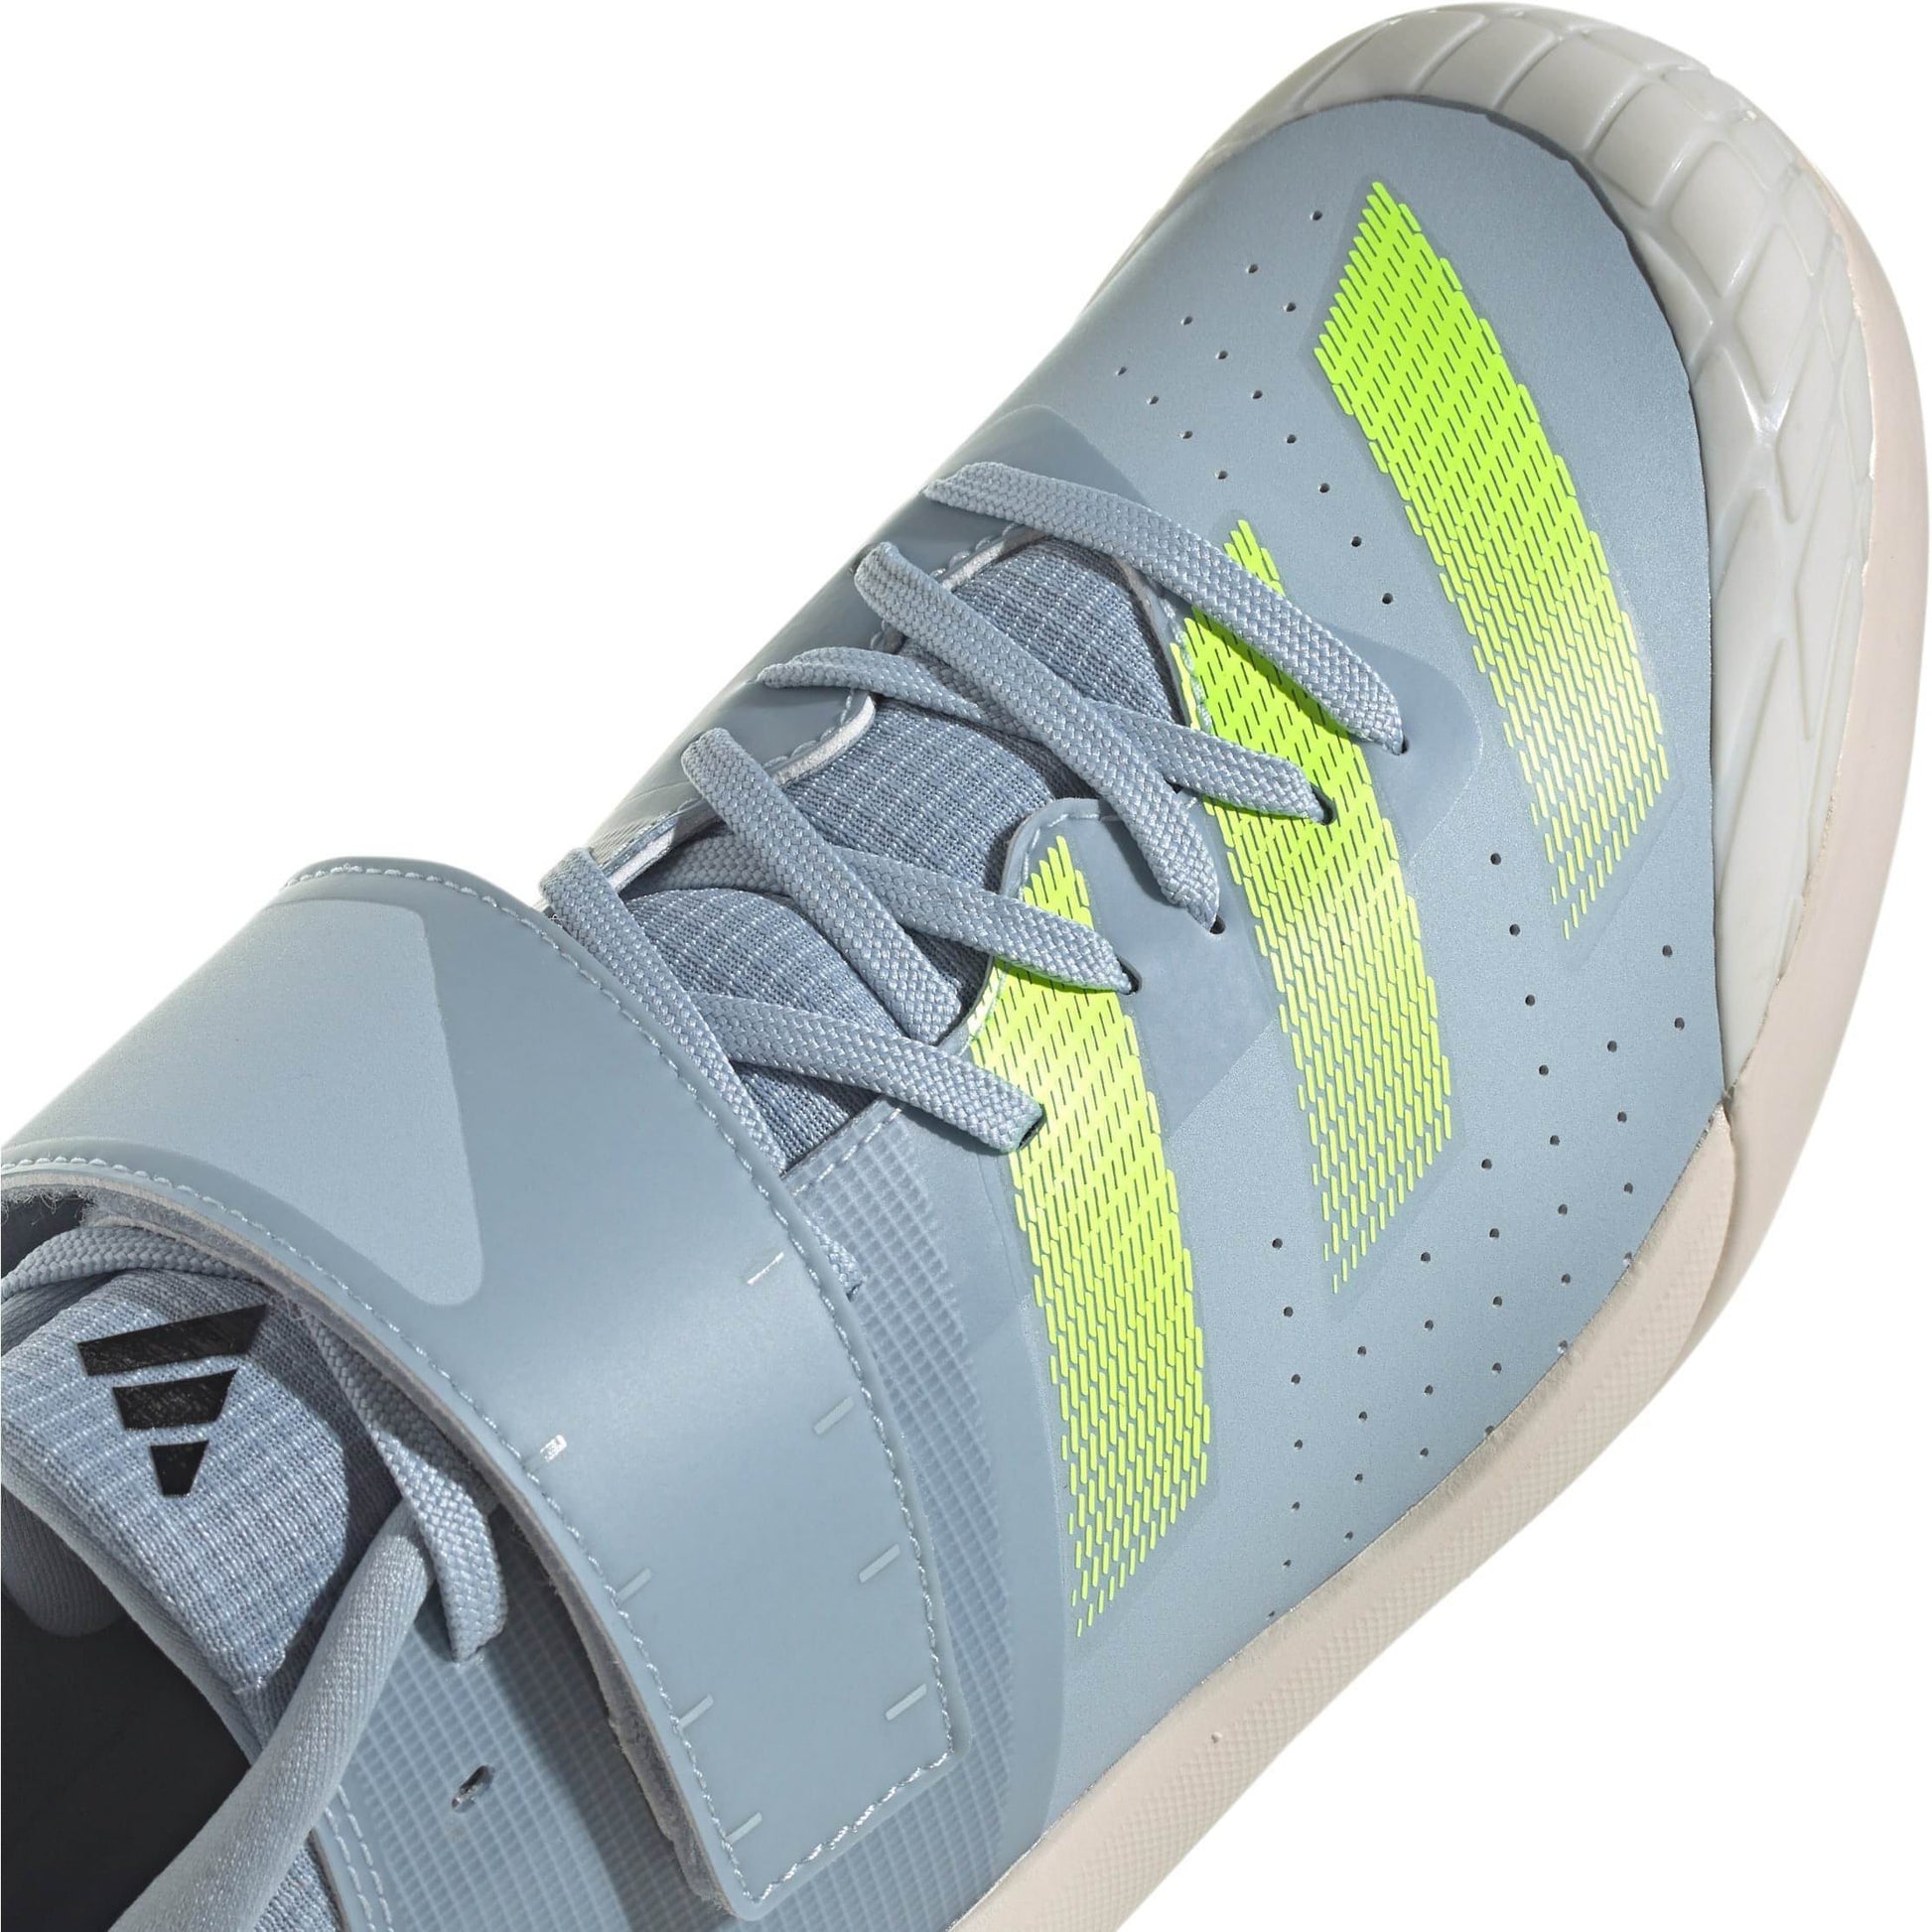 Adidas Adizero Javelin Ie6886 Details